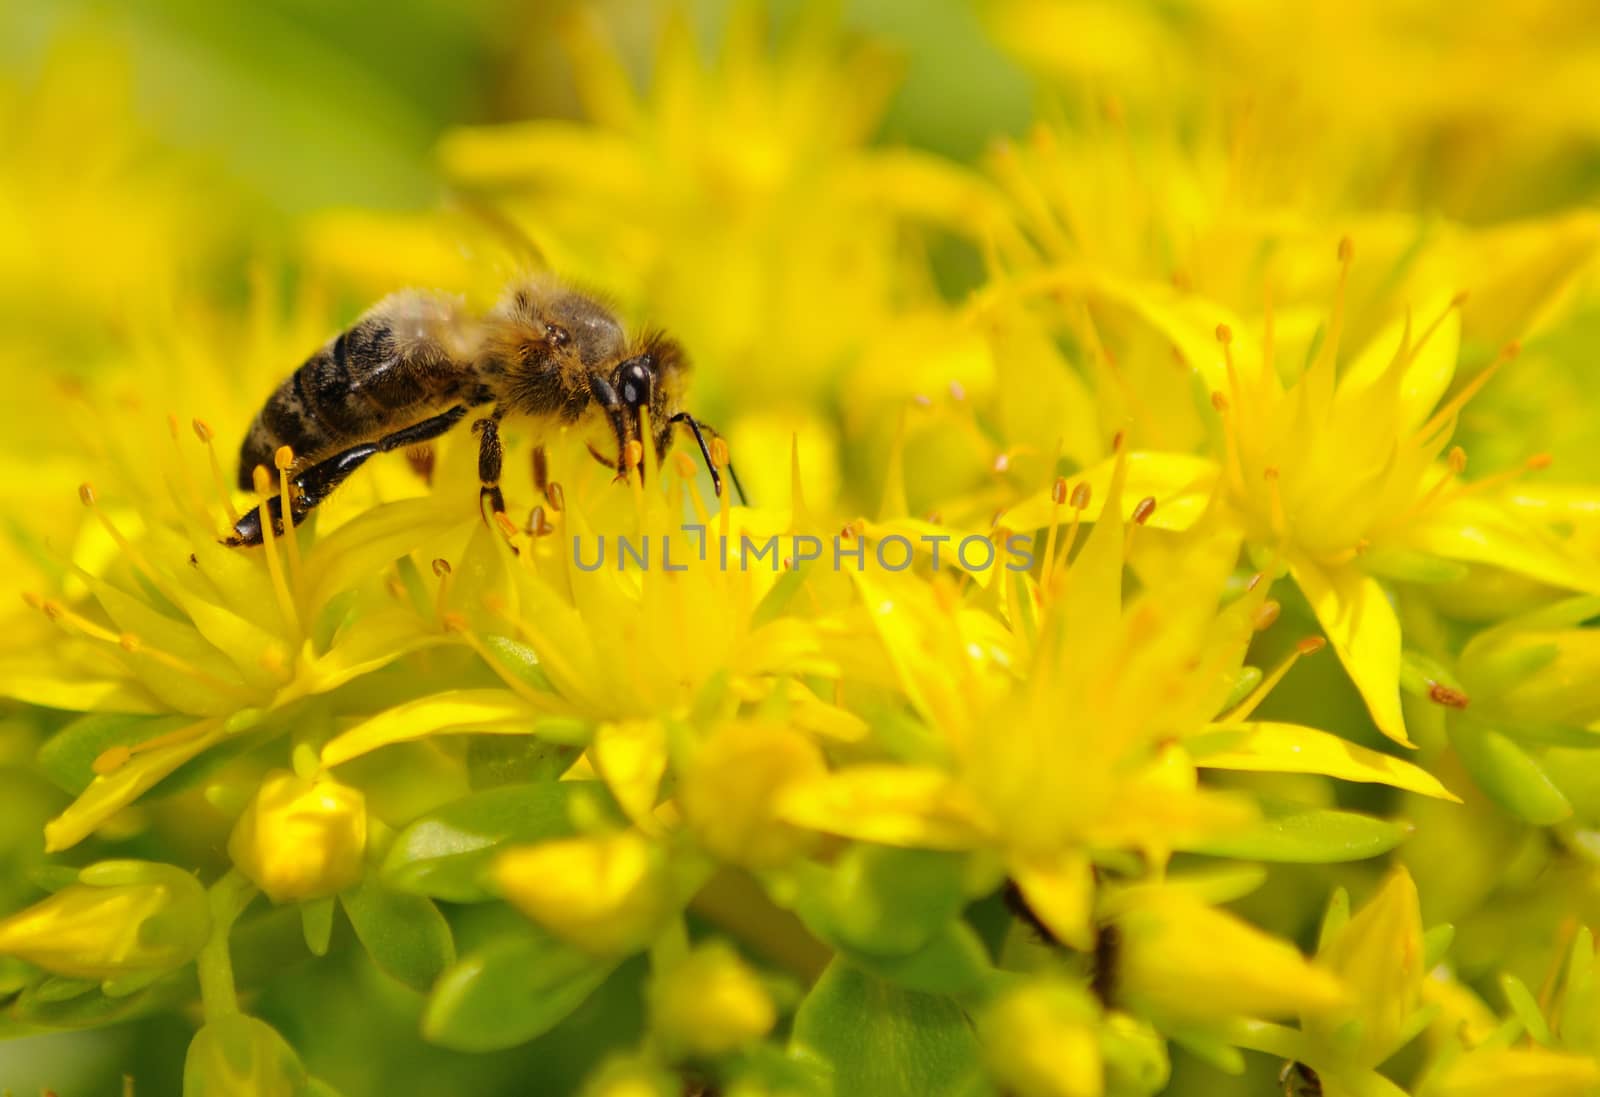 Honeybee (Apis mellifera) pollinated yellow flower.